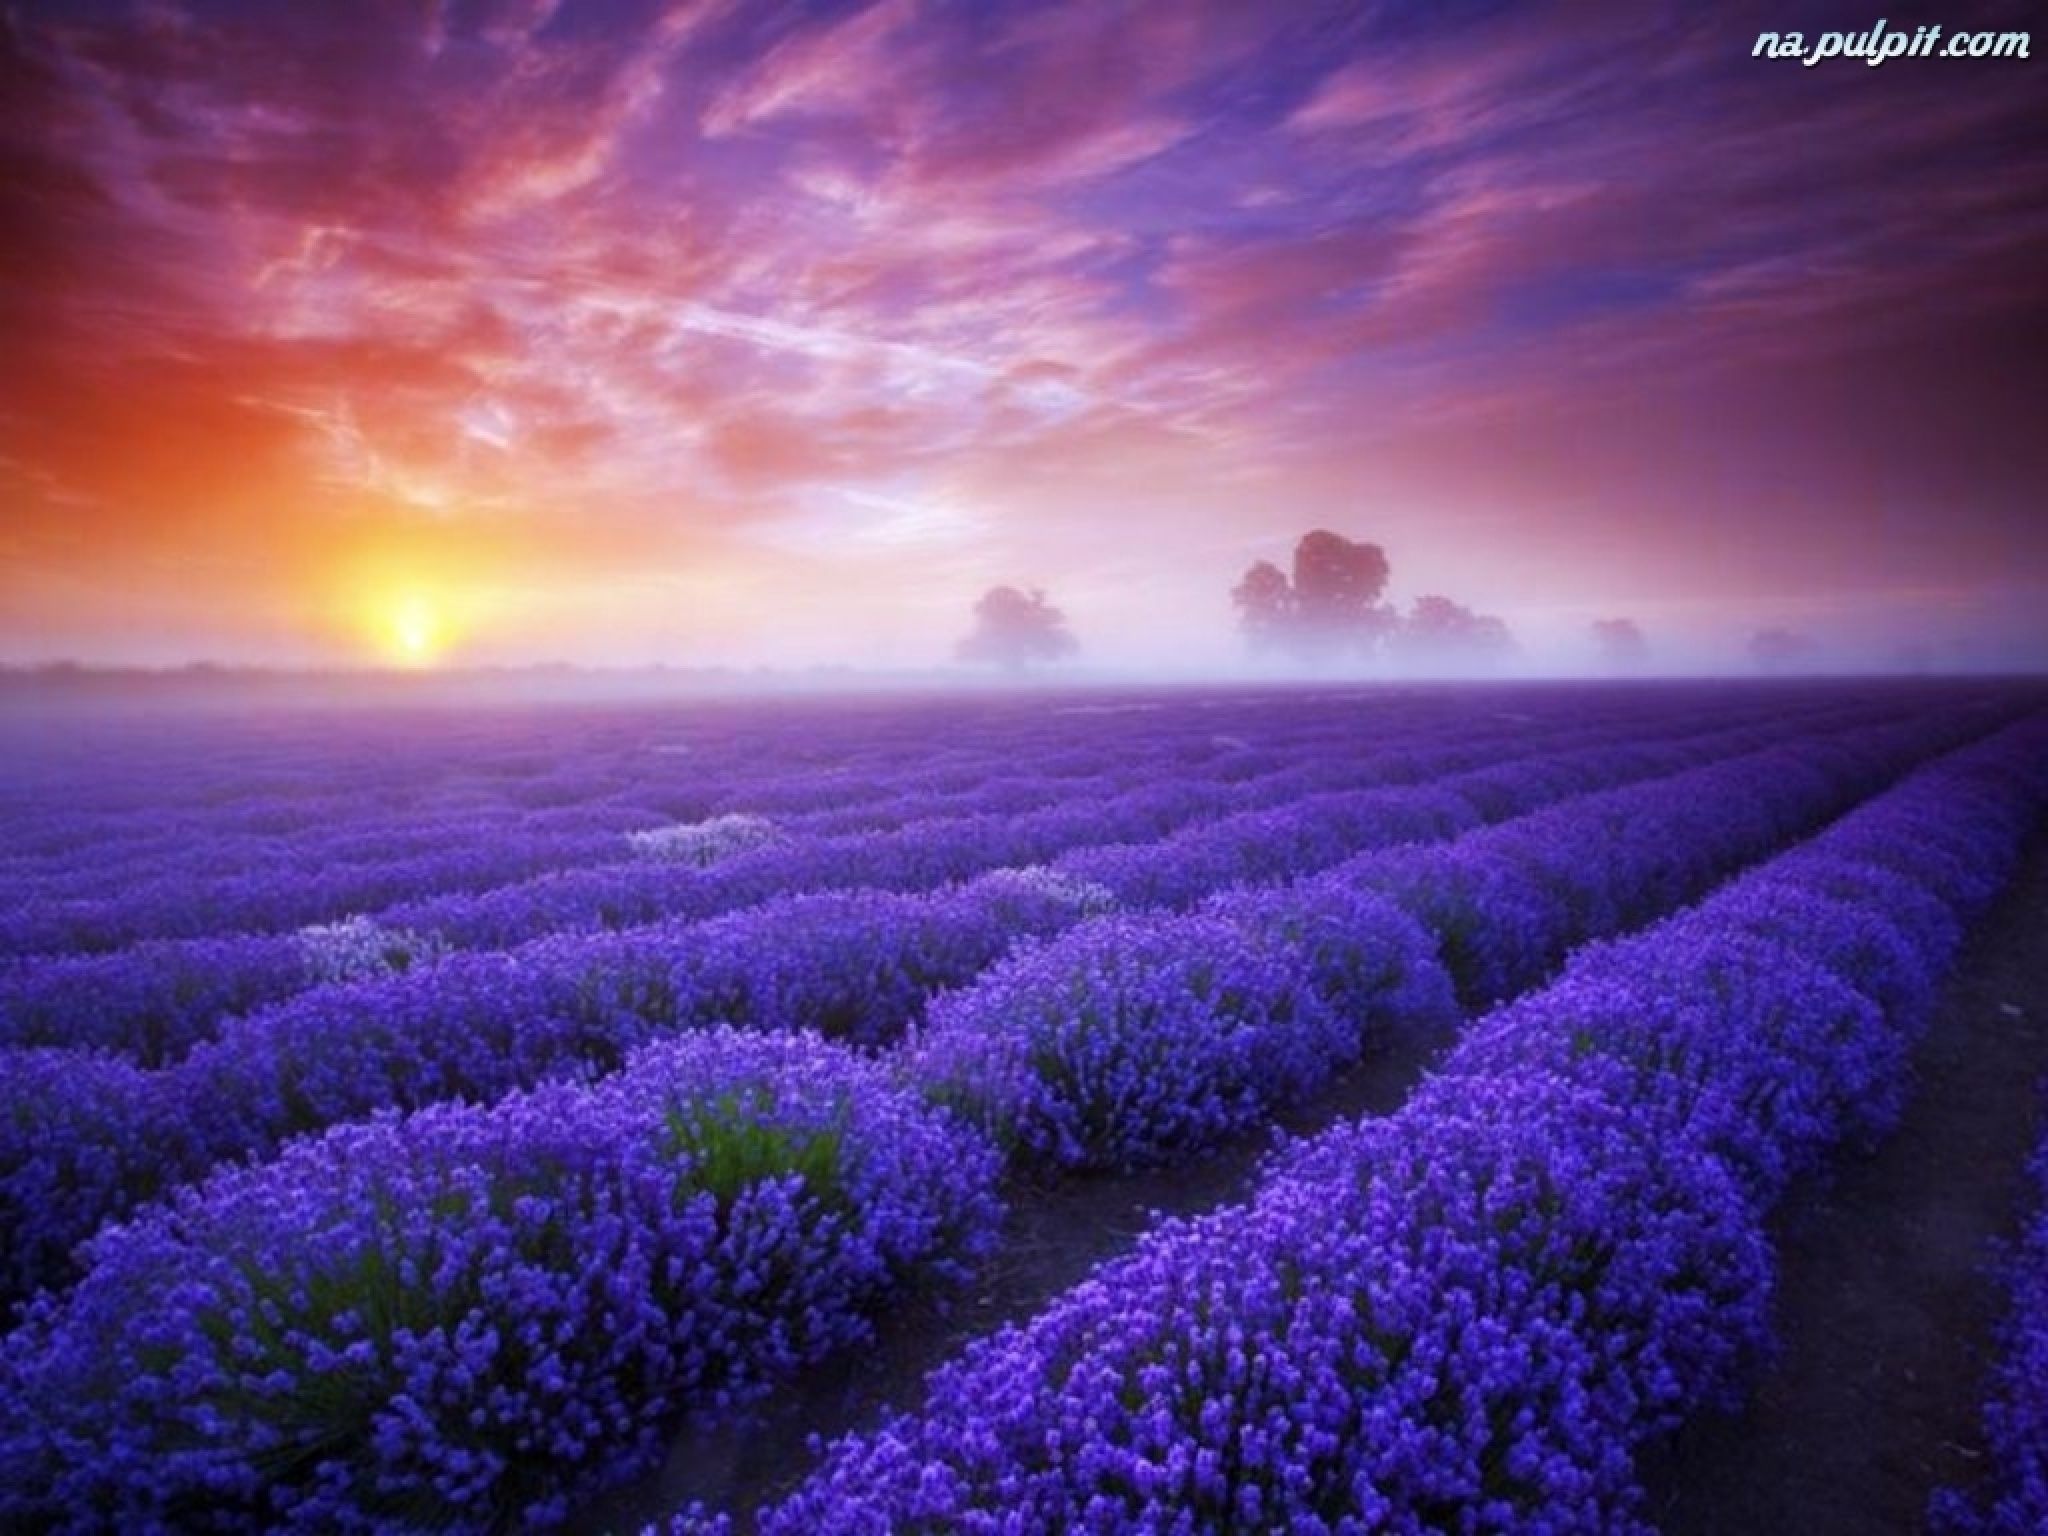 Lavender fields live wallpaper